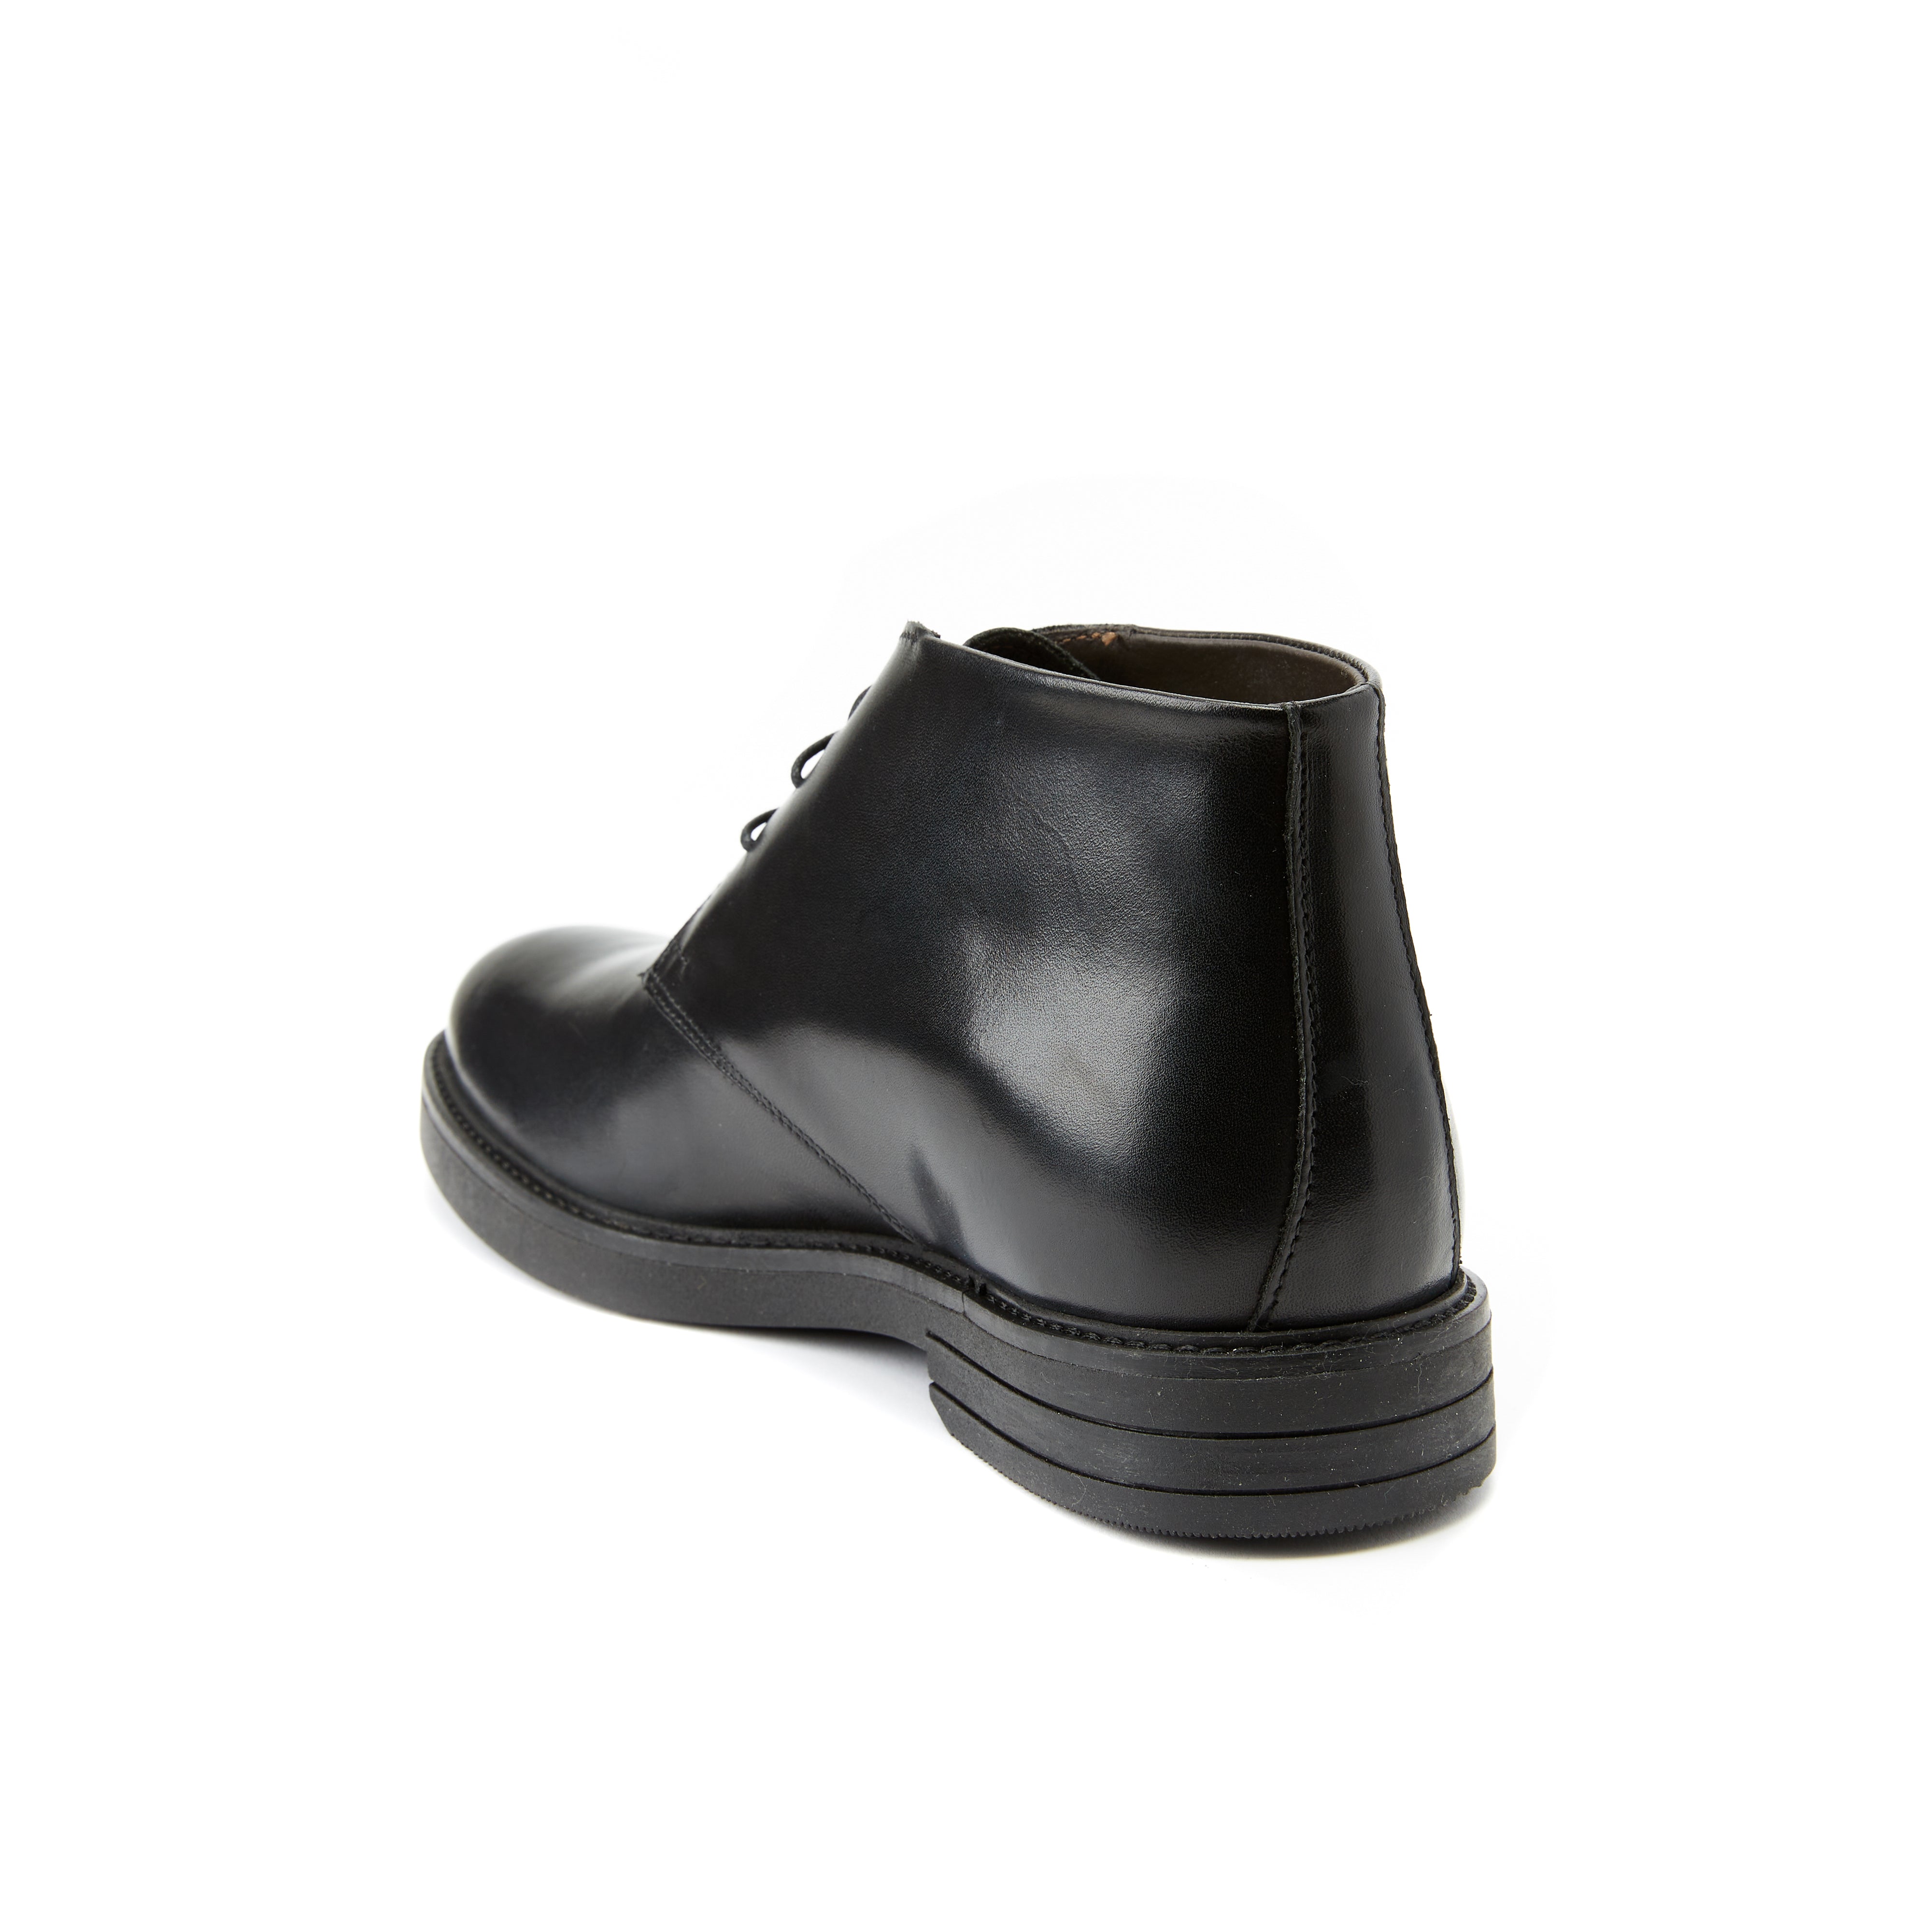 Plain chukka boot black